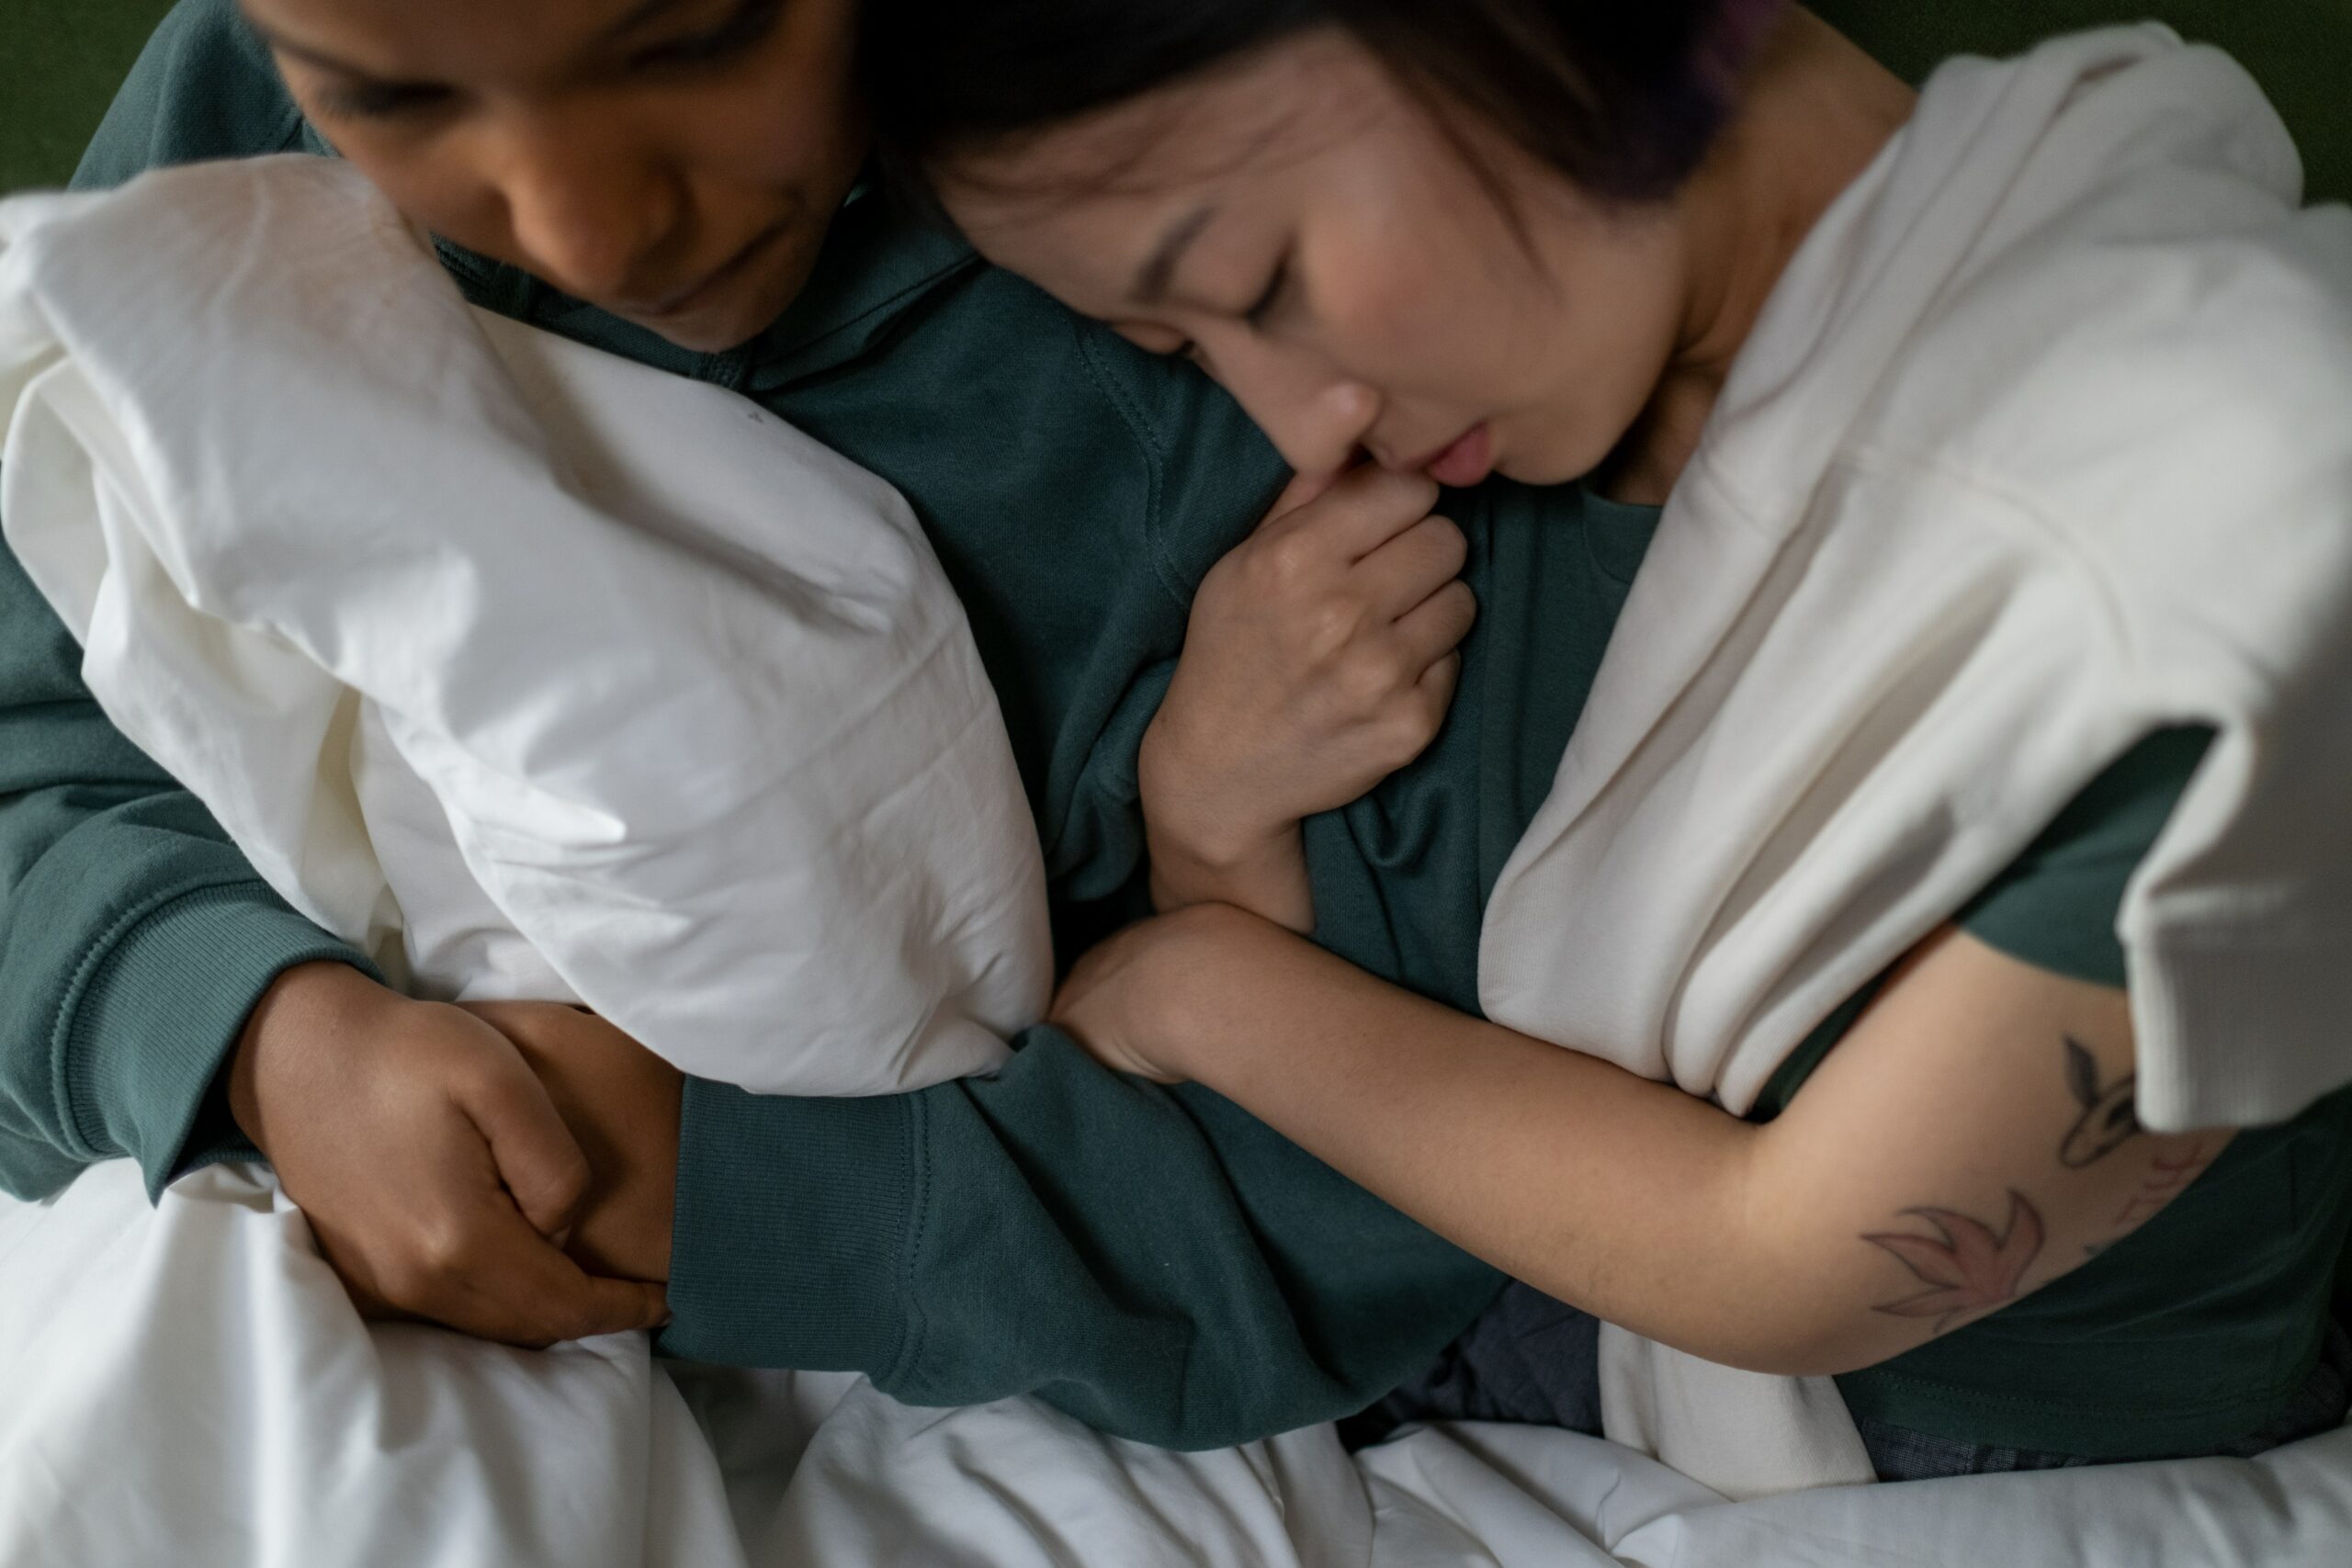 Two people hugging under blankets